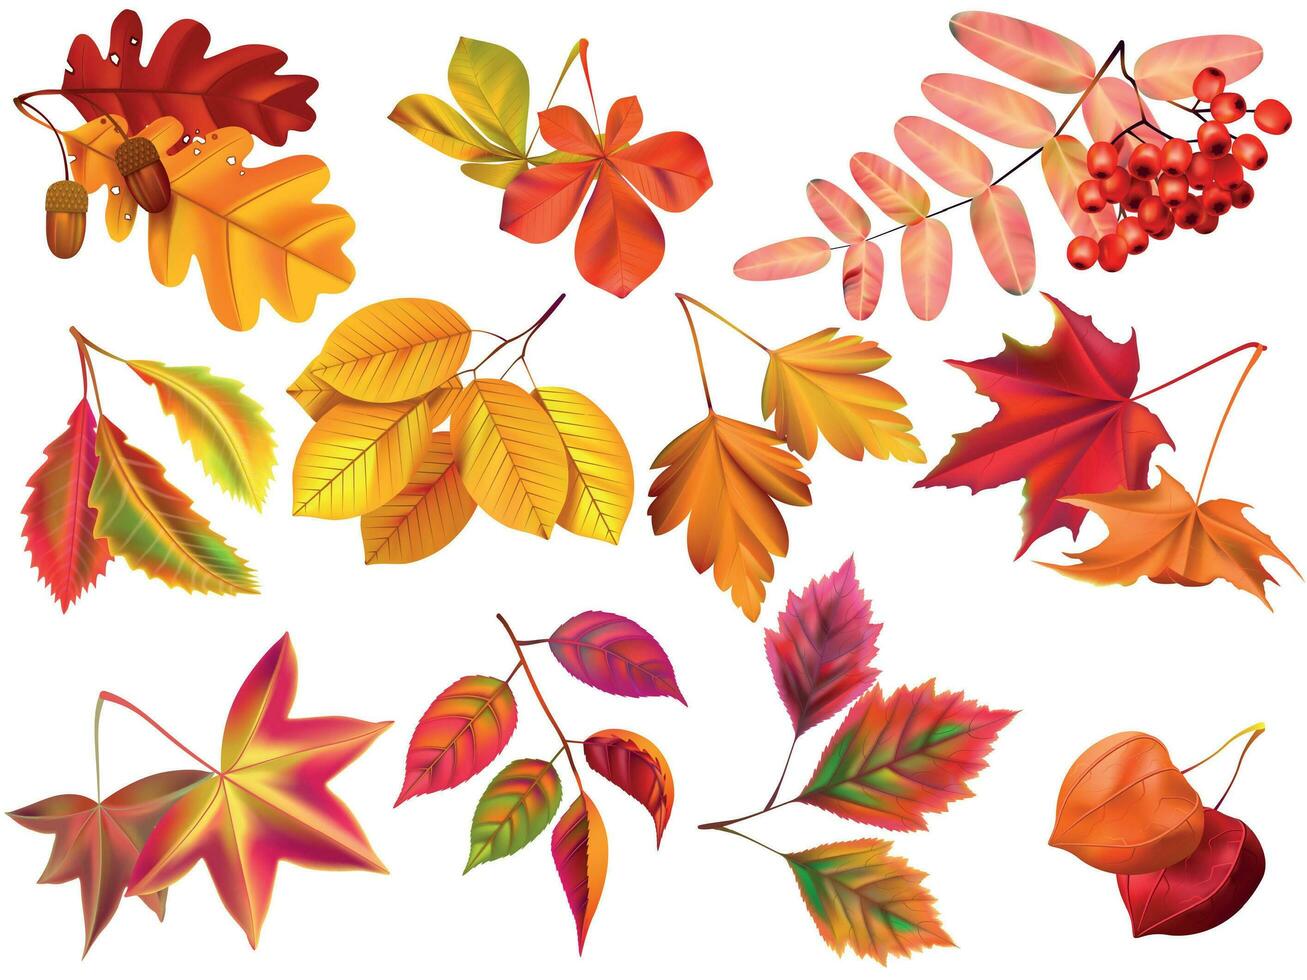 Autumn leaf. Maple fall leaves, fallen foliage and autumnal nature leafage realistic vector set